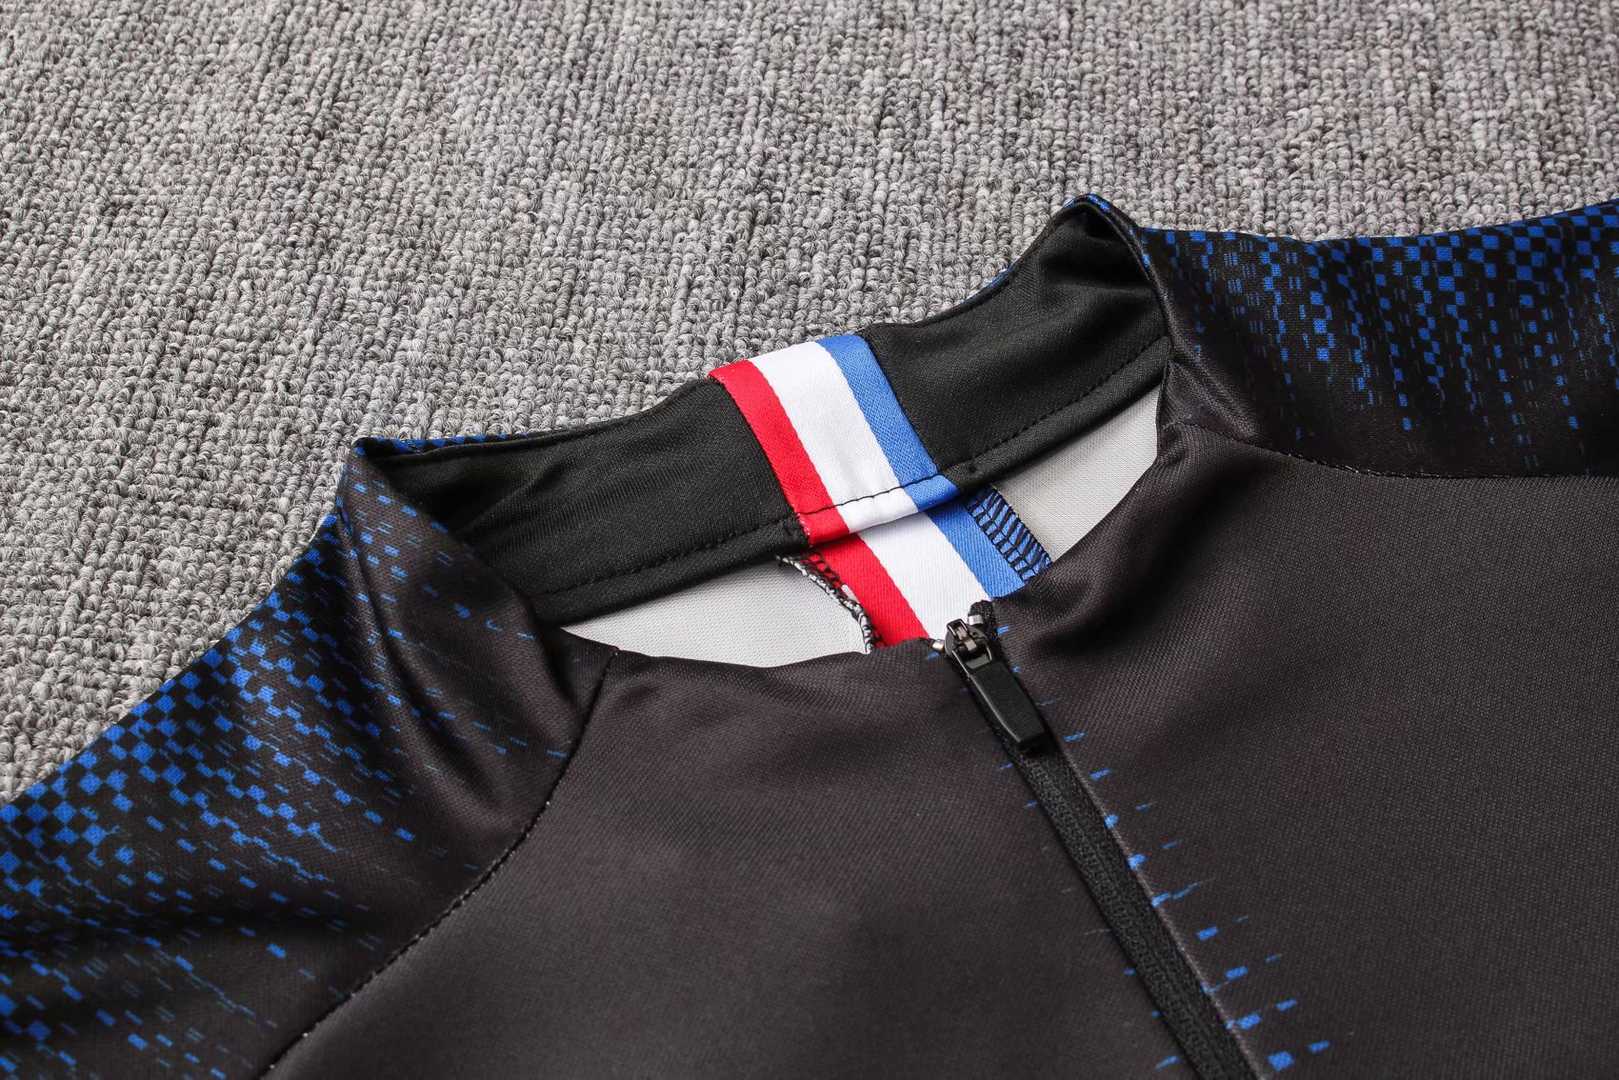 2019/20 PSG Half Zip Blue Stripe Mens Soccer Training Suit(Jacket + Pants)